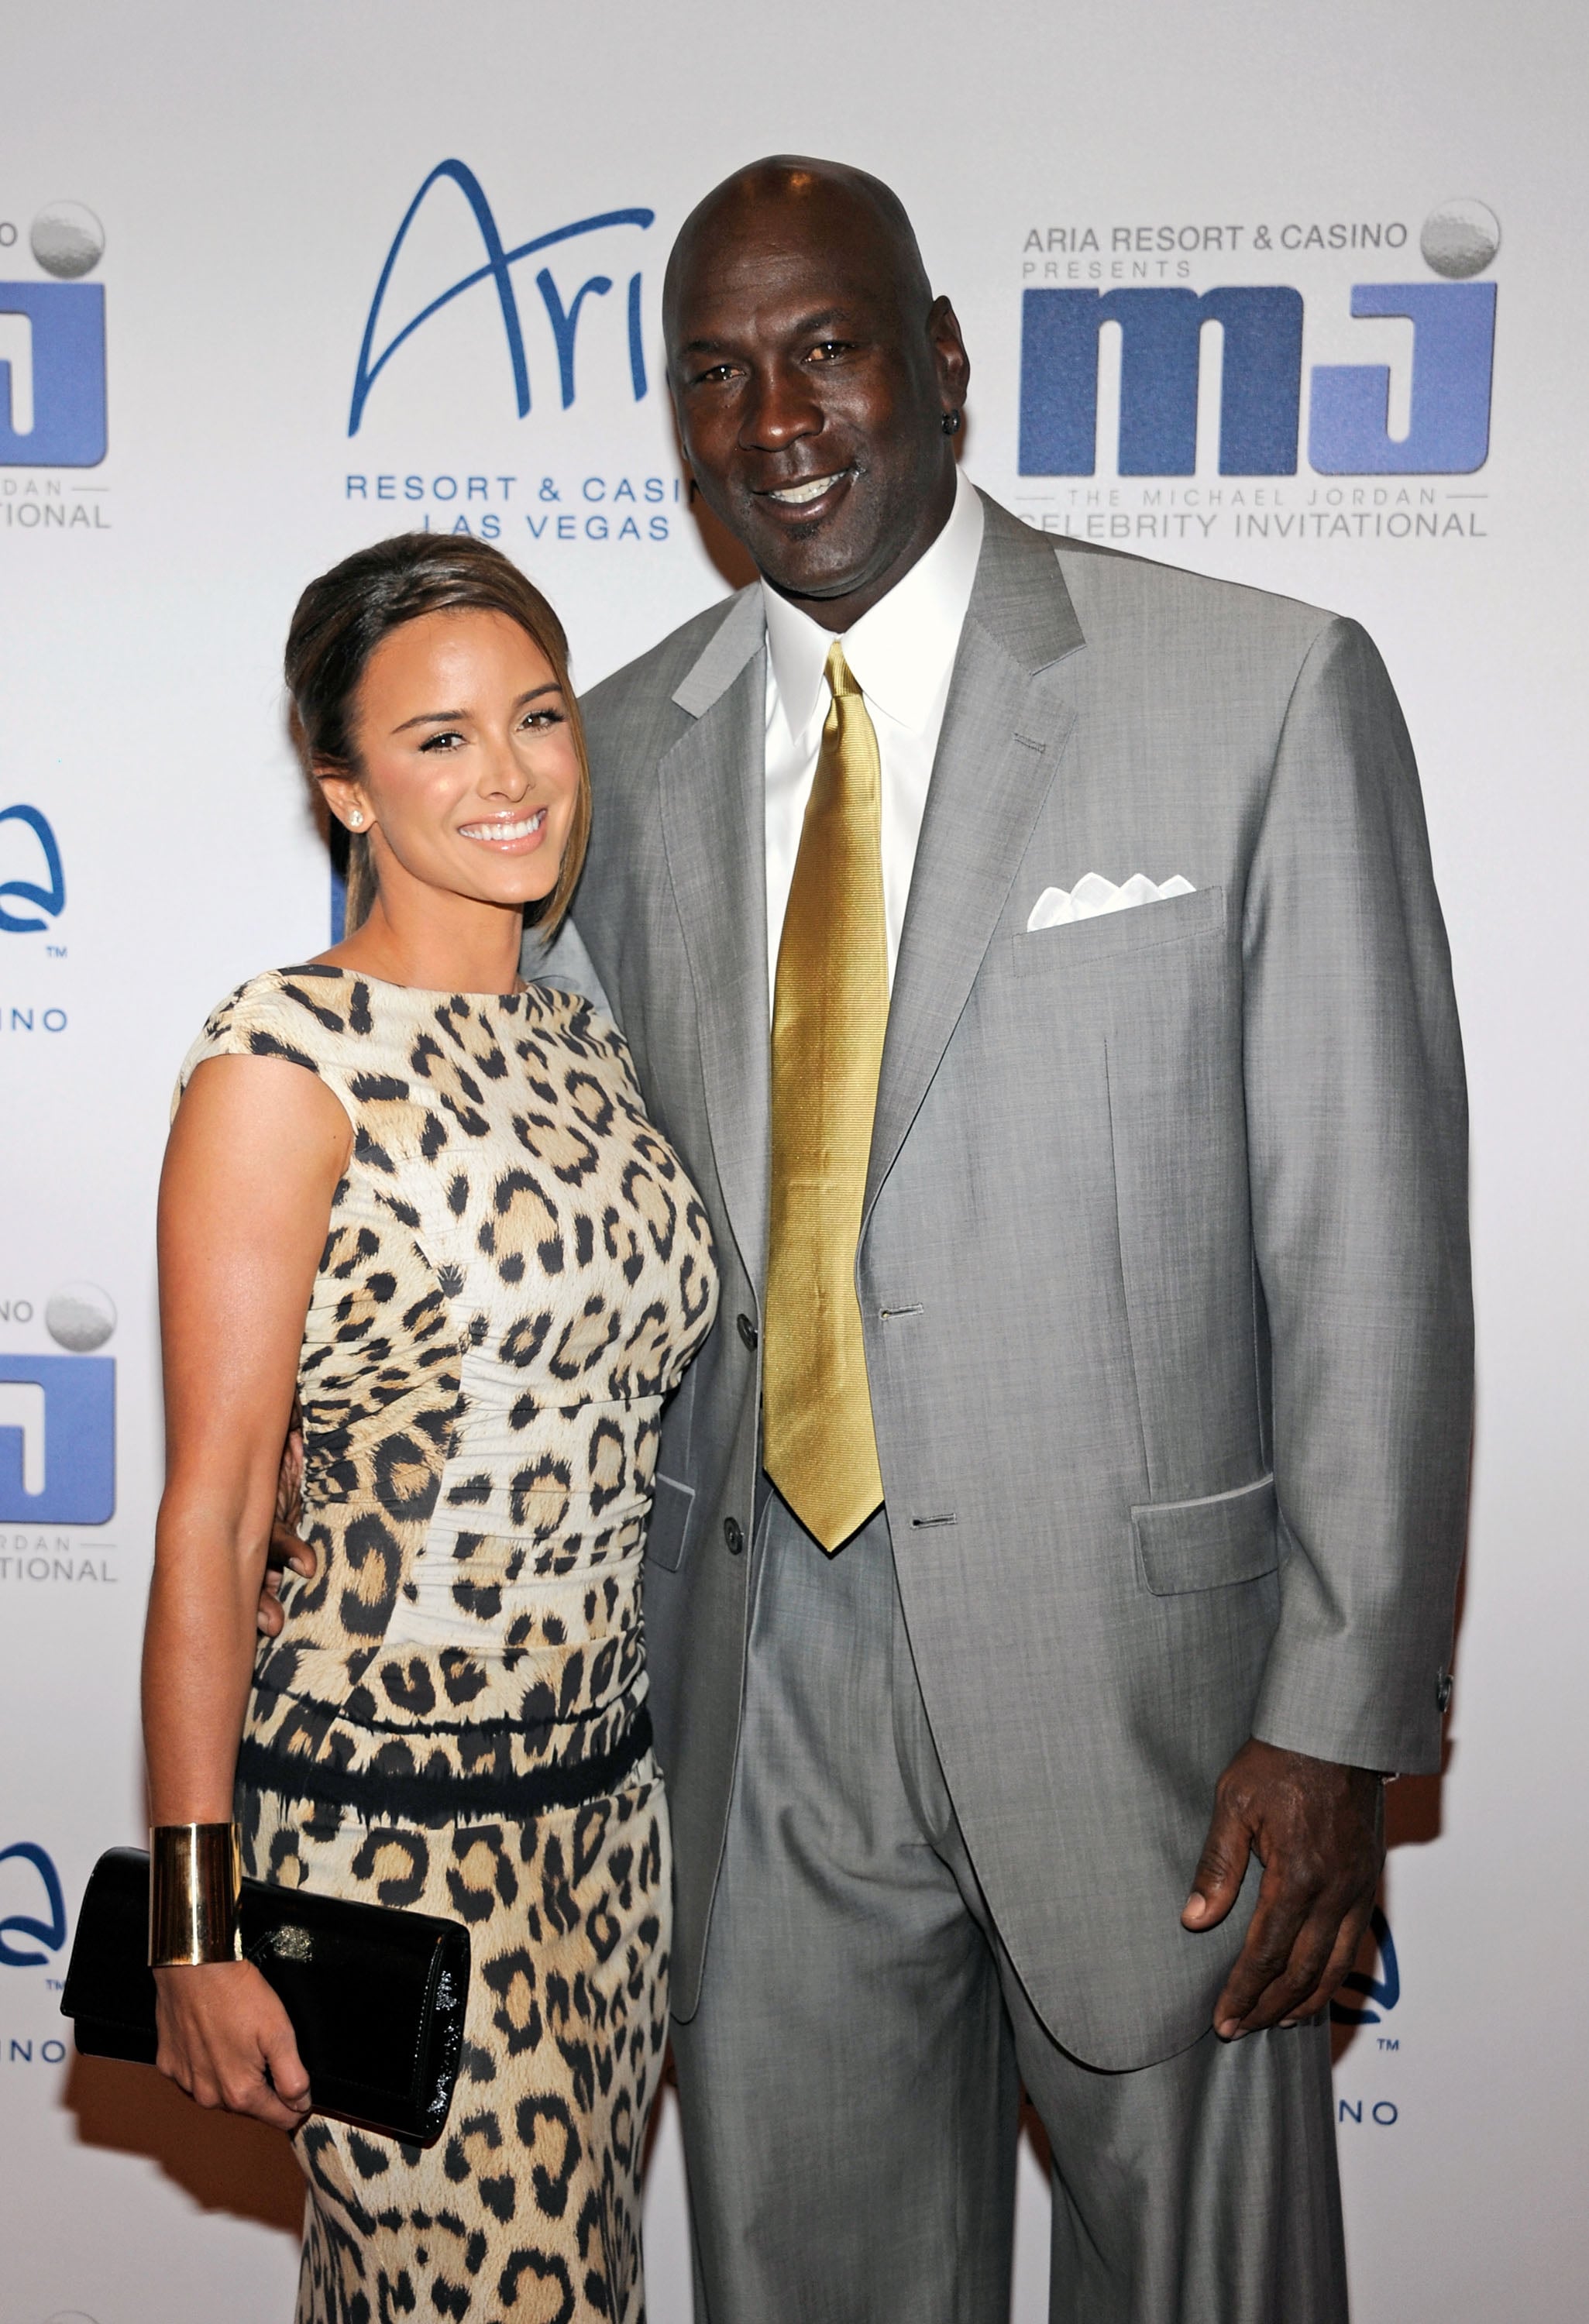 LOOK: Michael Jordan and his wife Yvette Prieto through the years